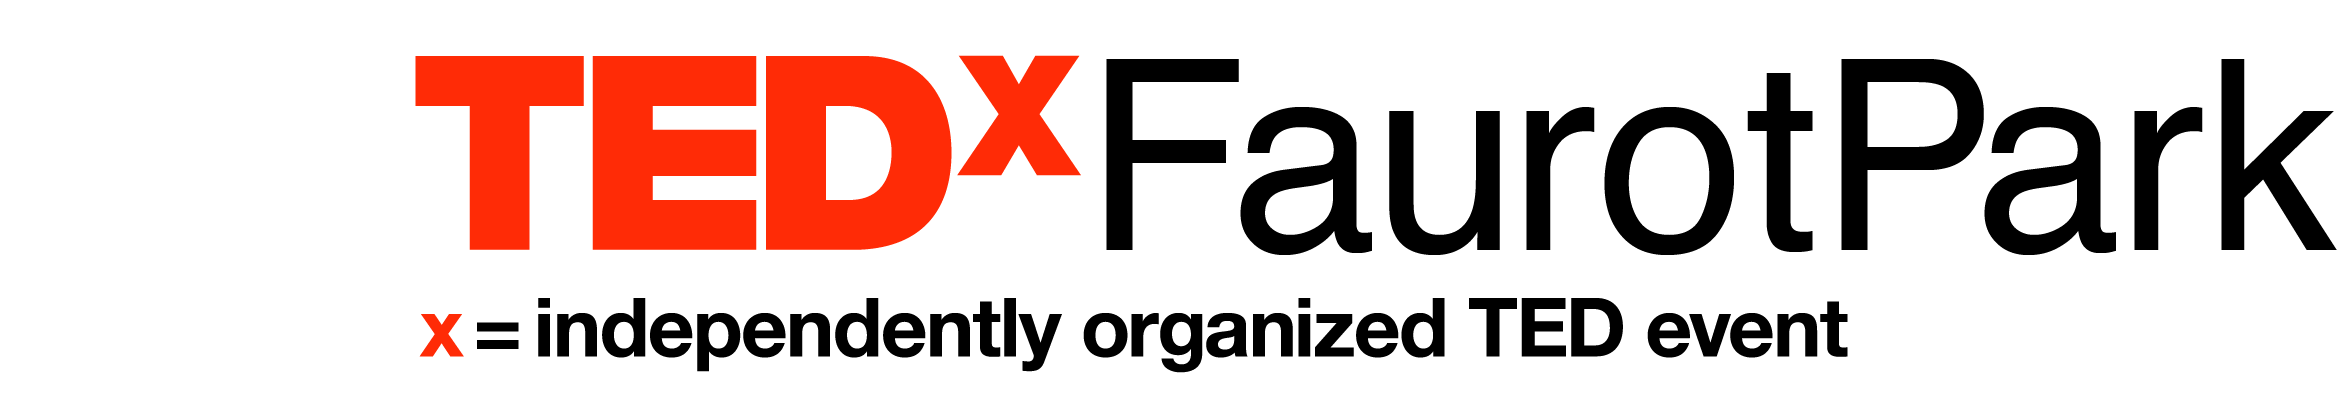 TEDxFaurotPark logo